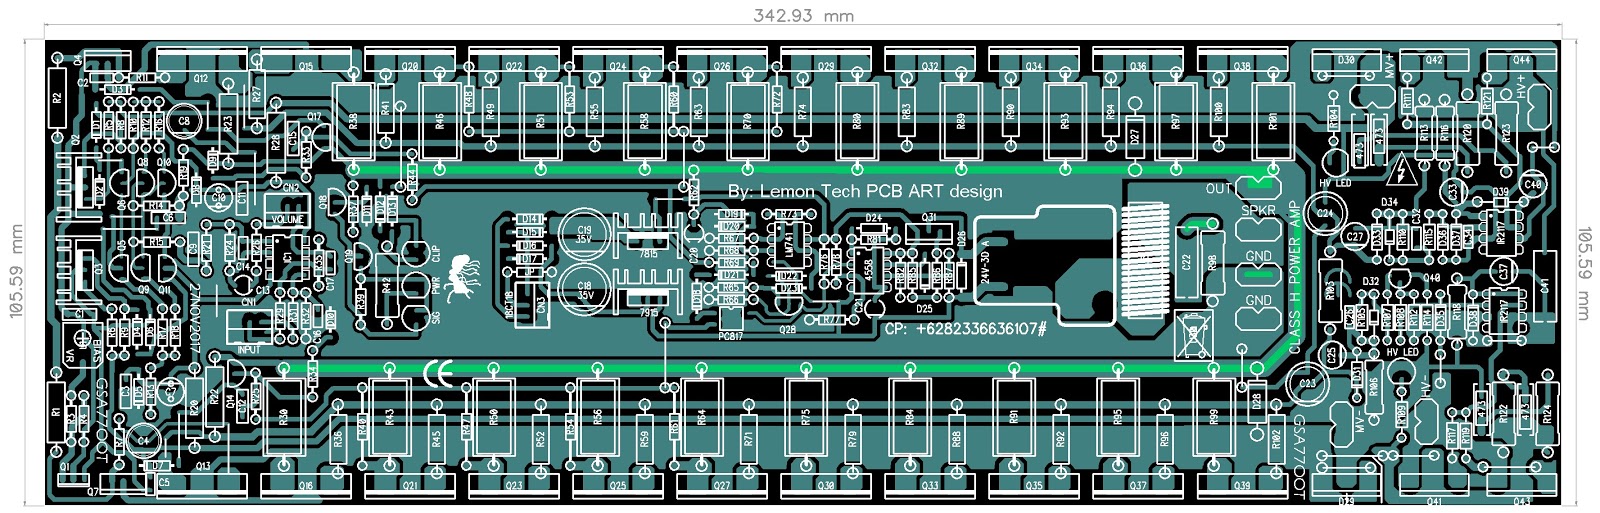 DK Tech PCB Audio Power AMPLIFIER